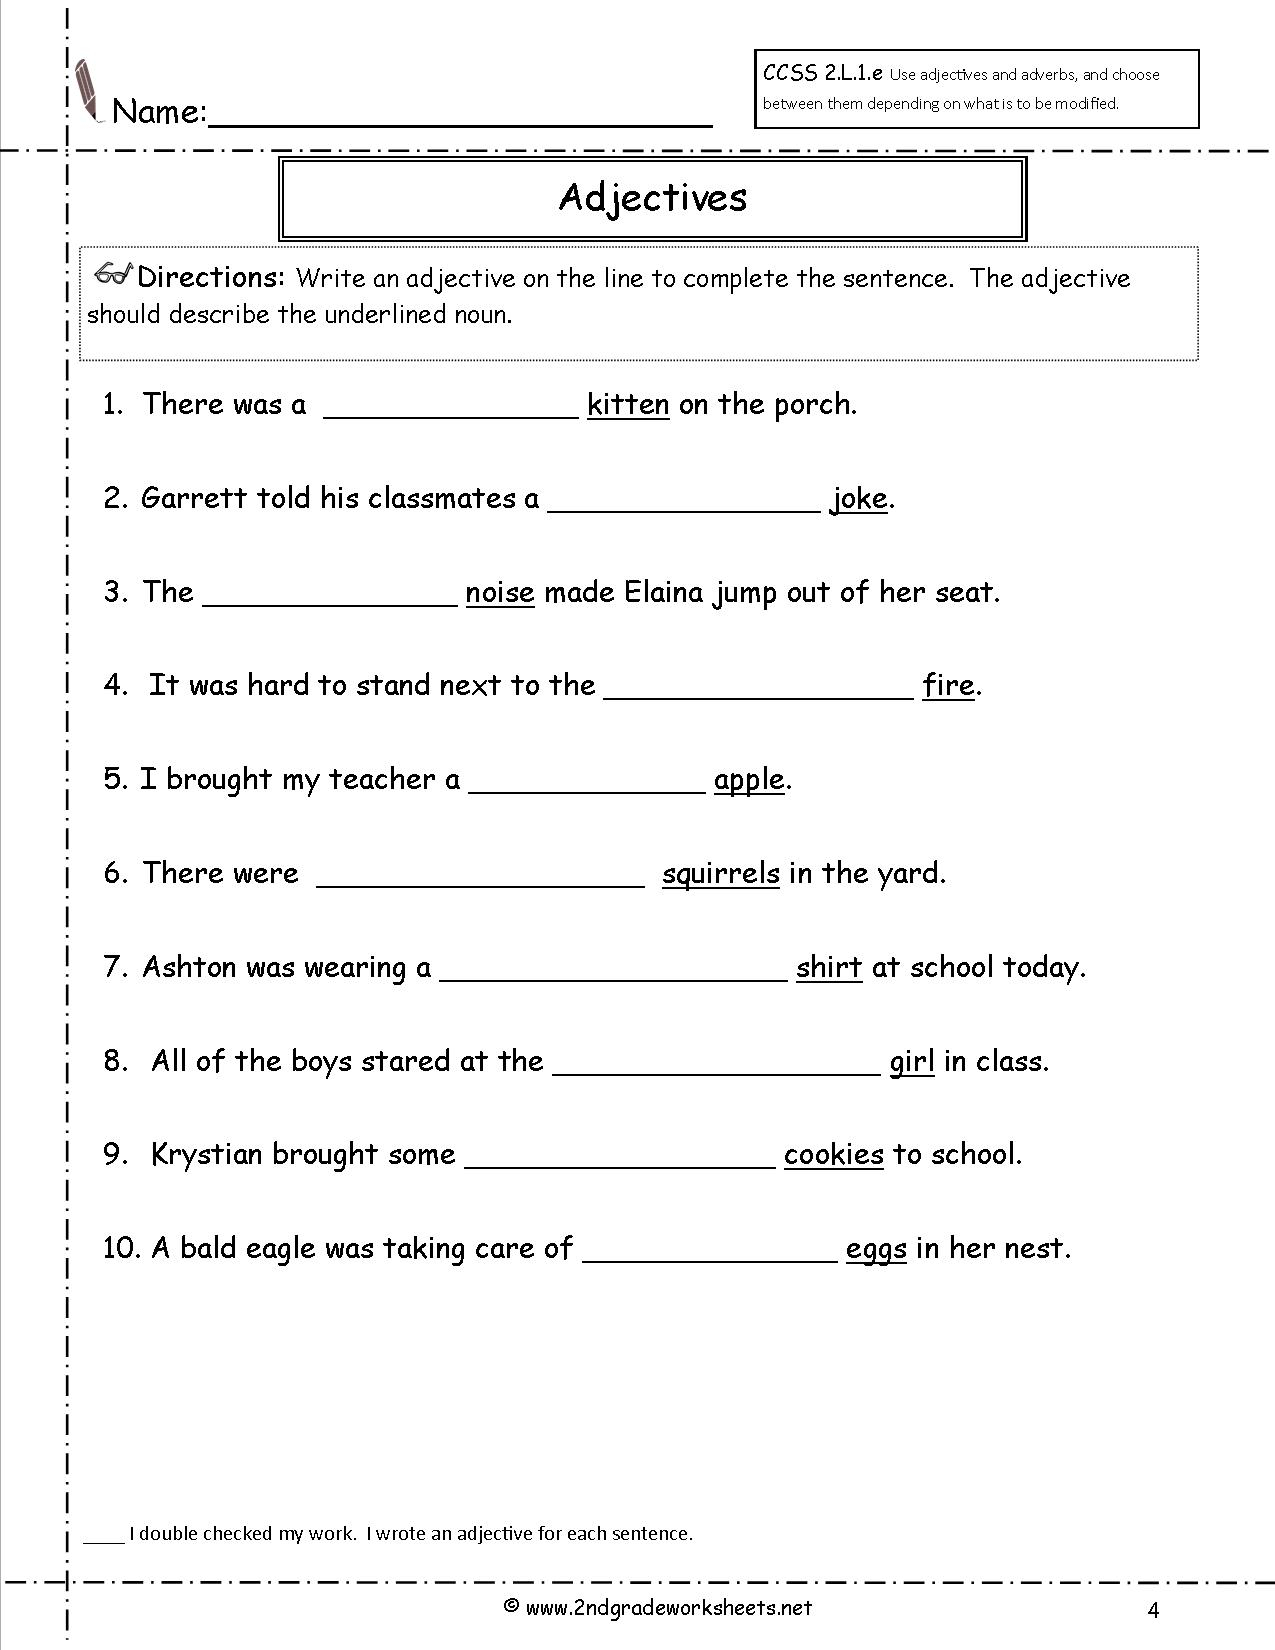 Language Adjectives Worksheets Adjectiveworksheets Net